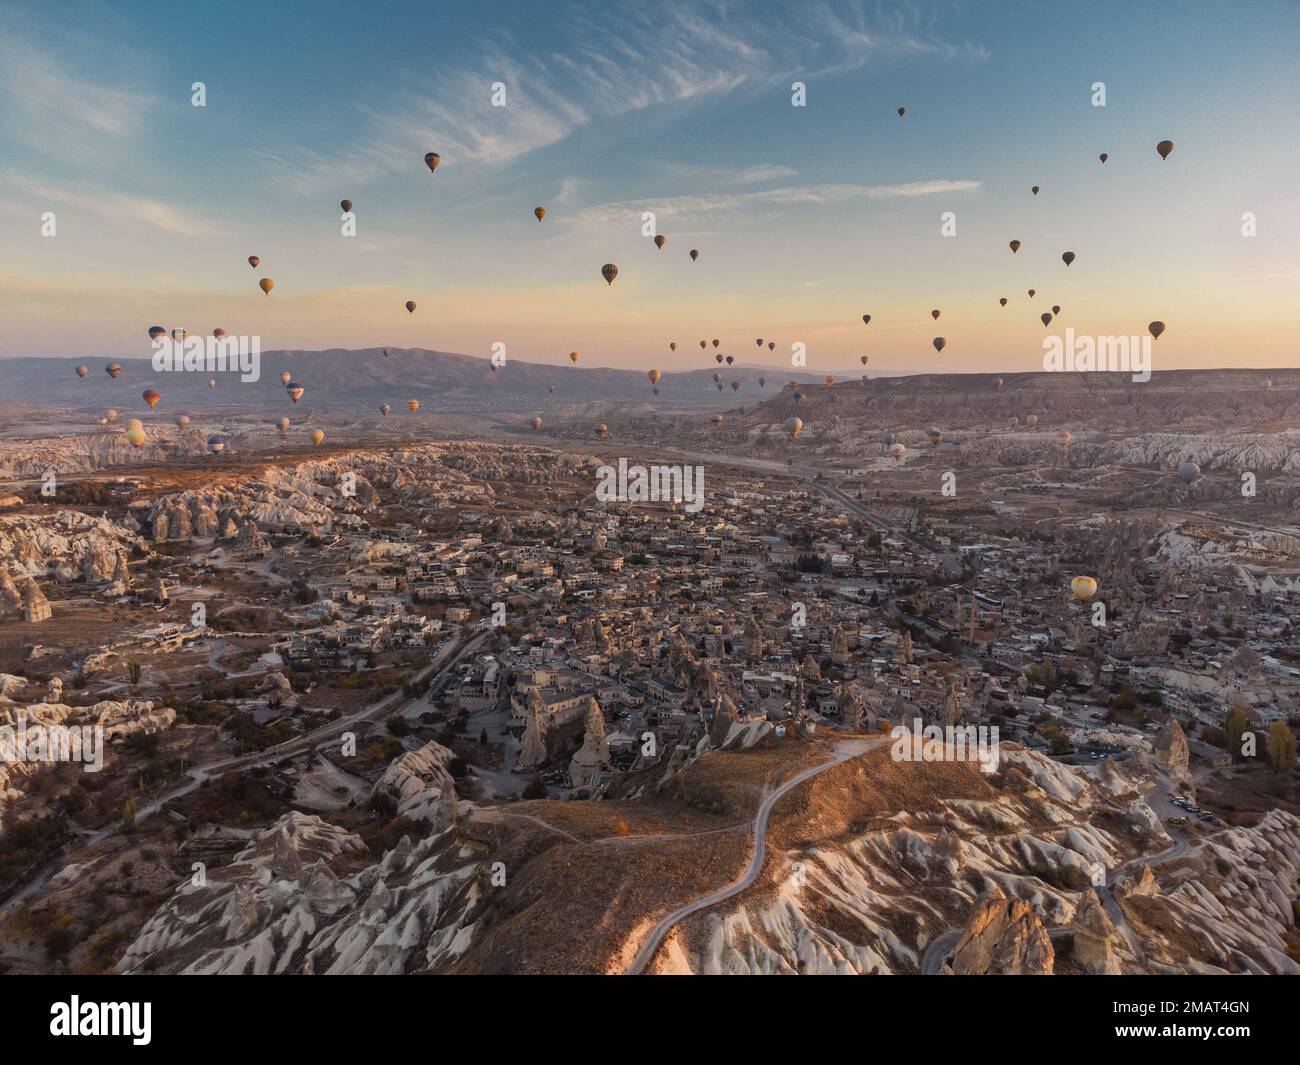 hot air balloons at fairy chimneys at sunrise in G reme, Cappadocia. Turkey Stock Photo